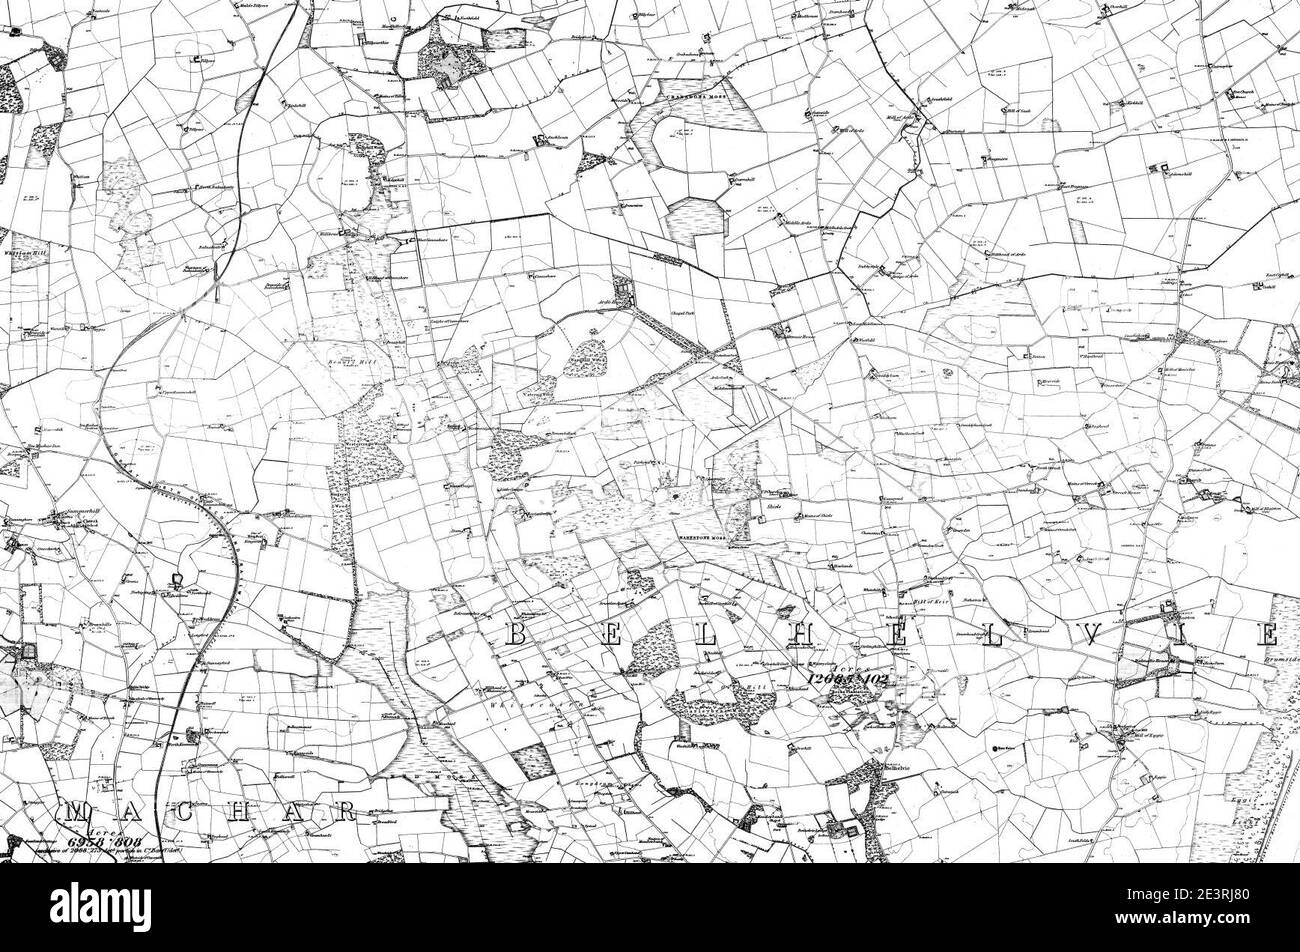 Map Of Aberdeenshire Os Map Name 056 00 Ordnance Survey 1868 1874 2E3RJ80 